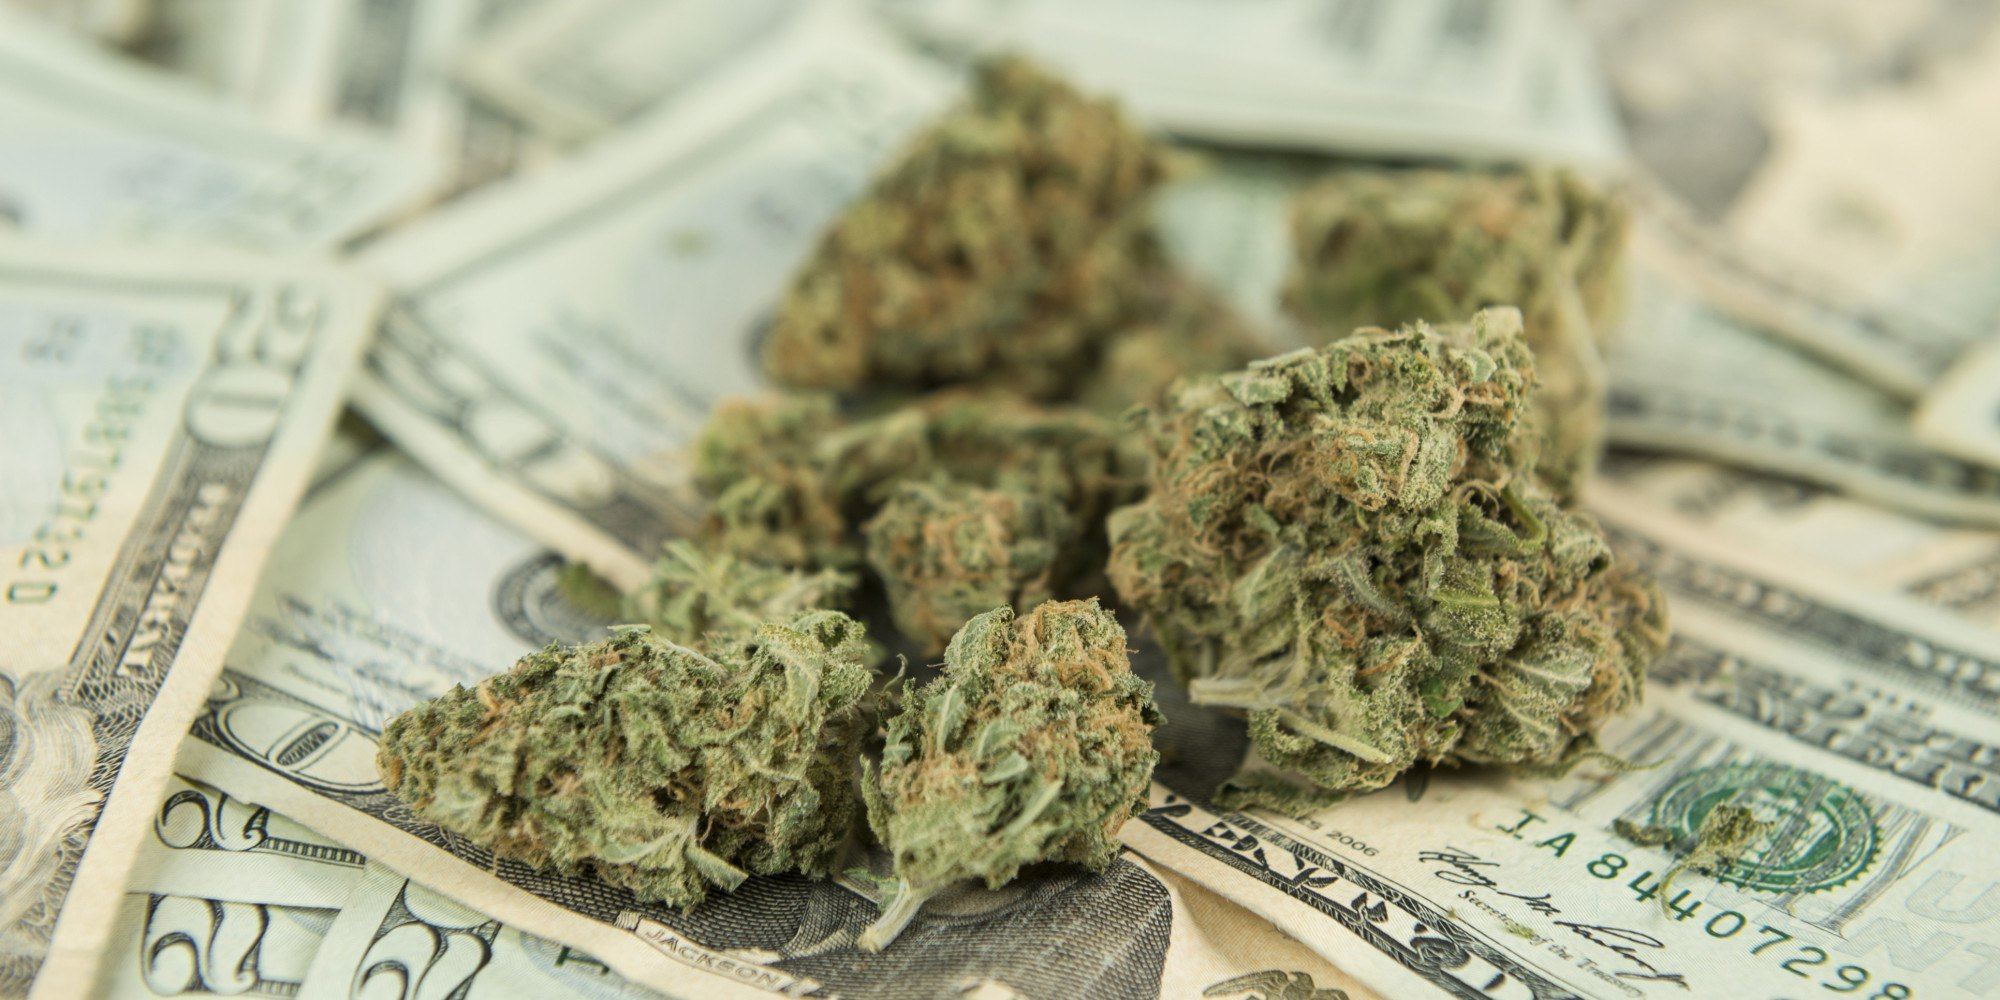 Image of legal marijuana and cash